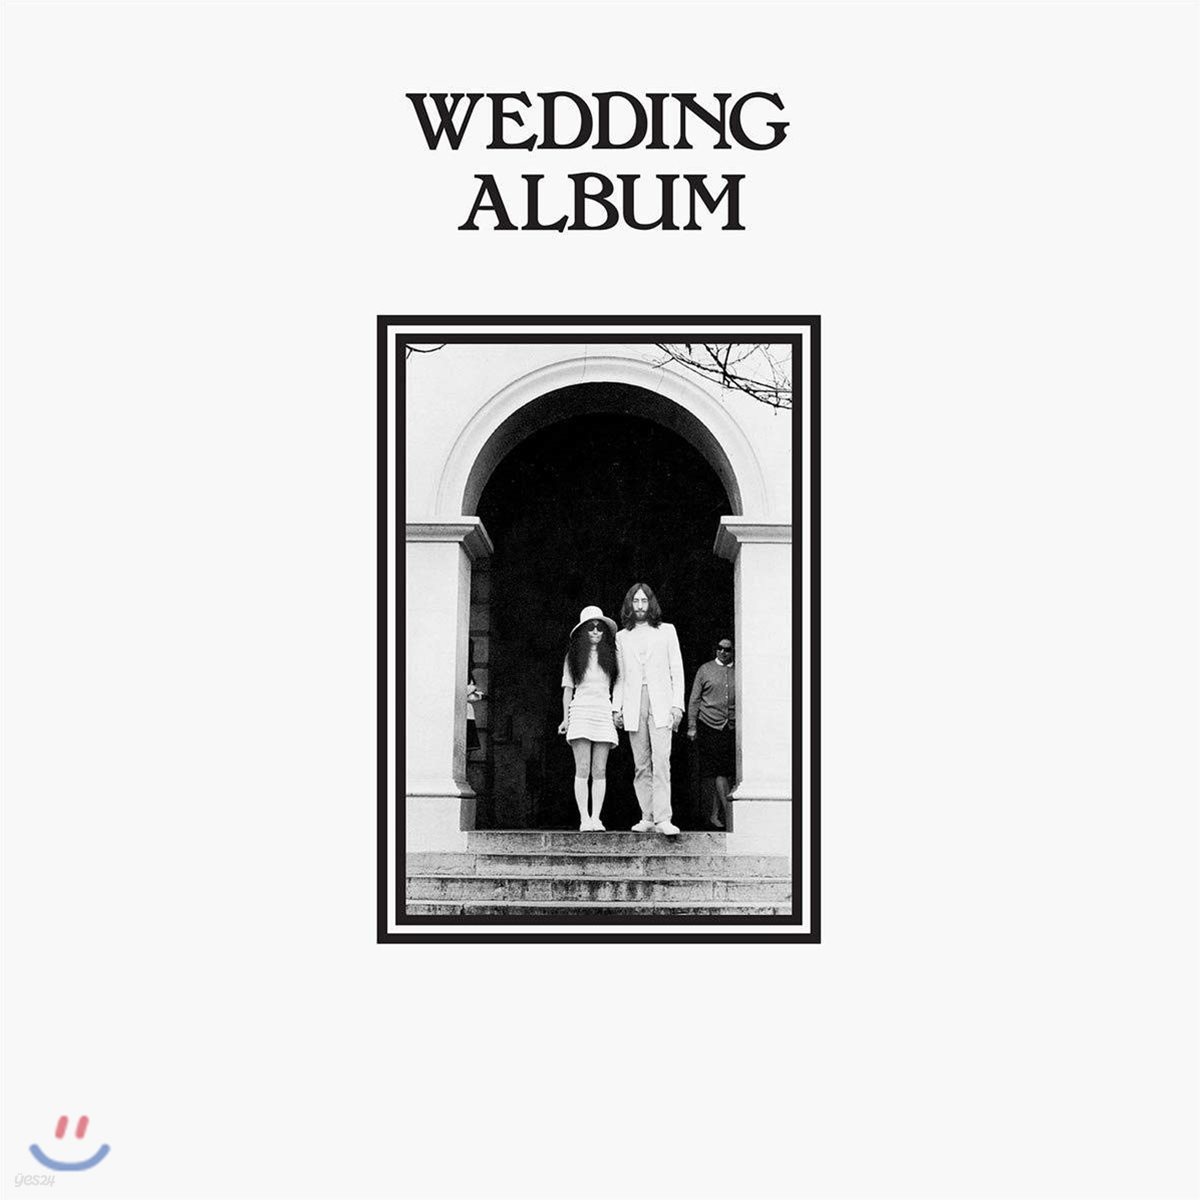 John Lennon / Yoko Ono (존 레논, 오노 요코) - Unfinished Music, No. 3: Wedding Album